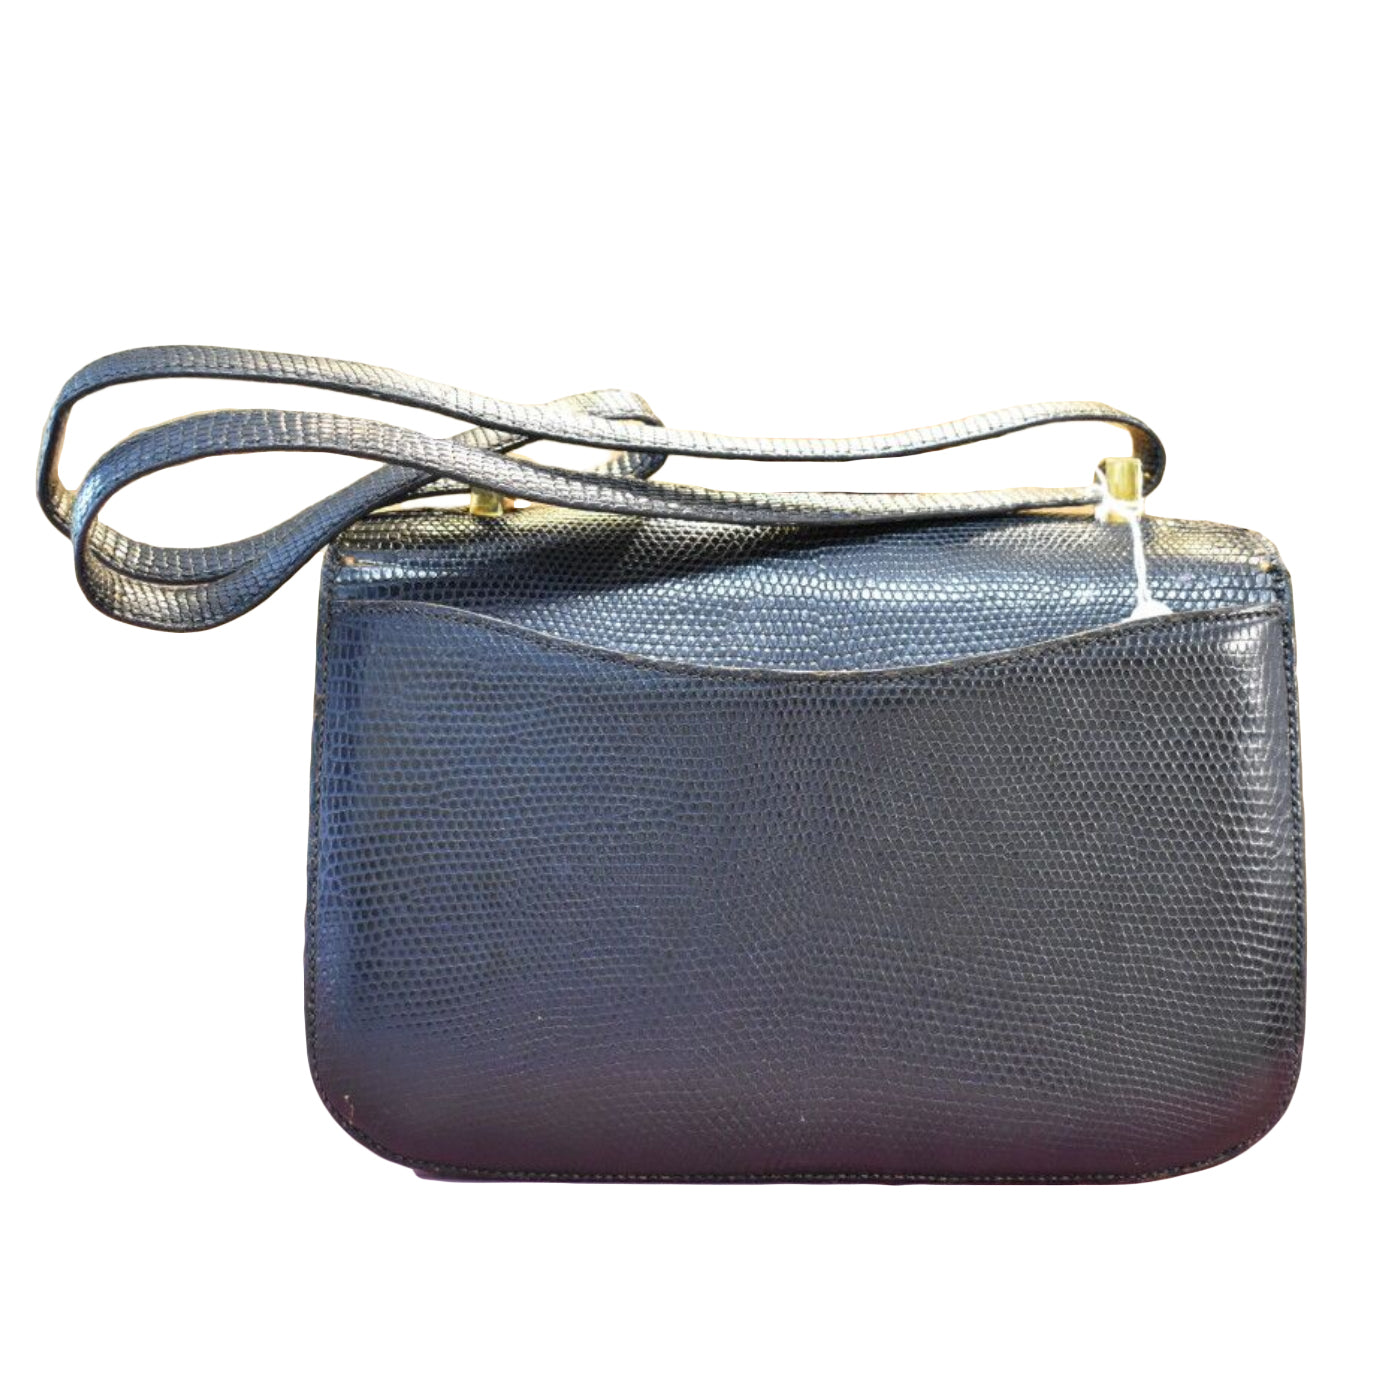 Constance leather handbag